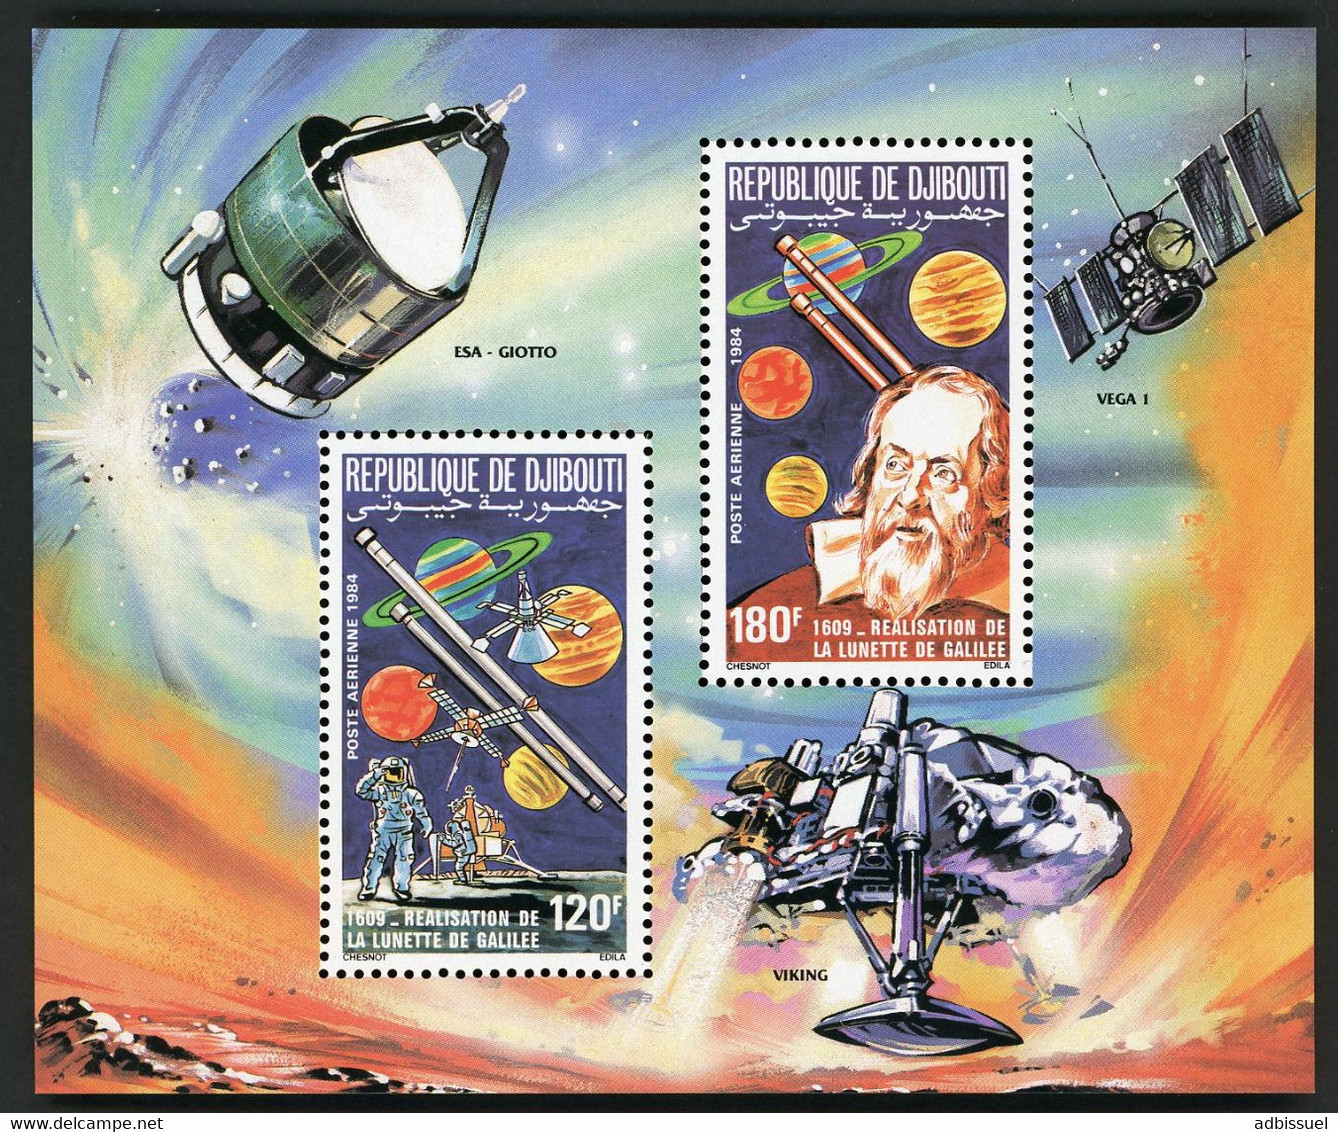 DJIBOUTI Bloc Spécial COTE 32 € Poste Aérienne N° 213 + 214 MNH ** Lunette De Galilée, Galileo's Telescope. TB/VG - Dschibuti (1977-...)